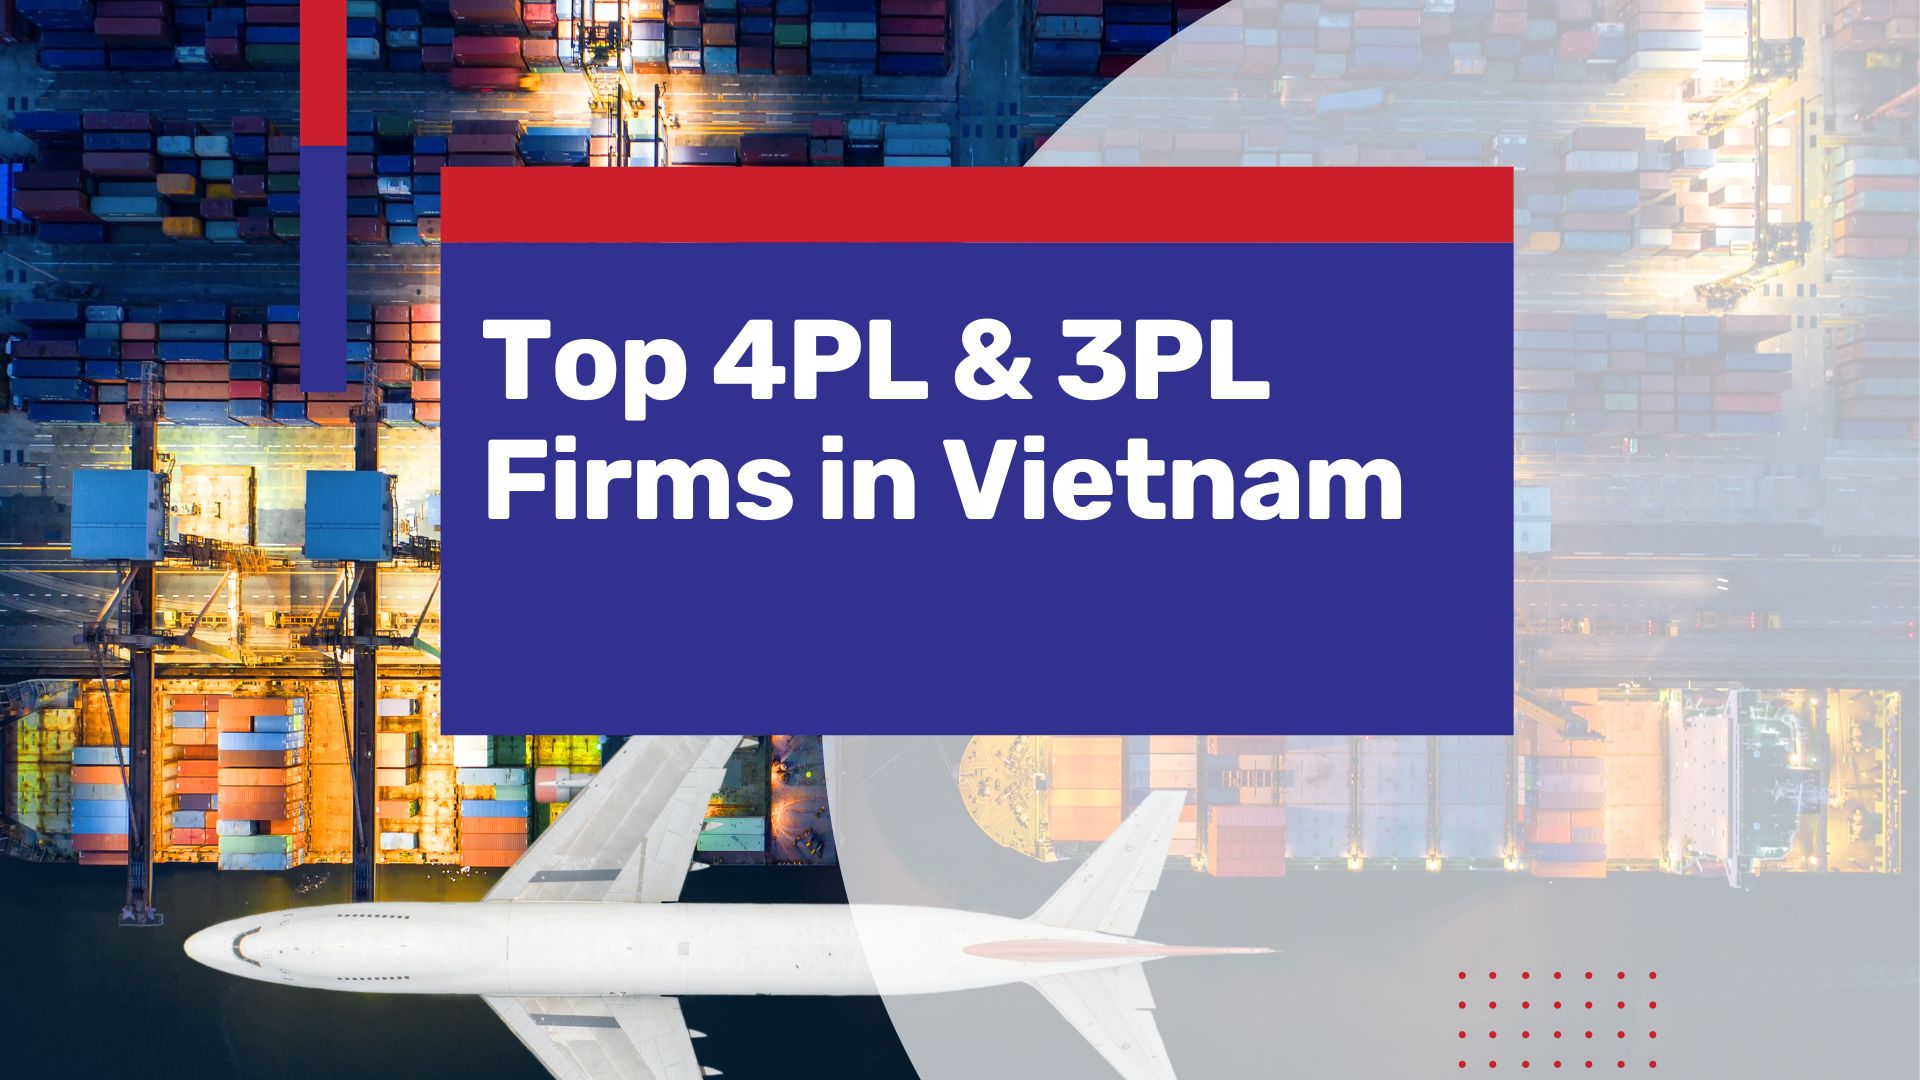 Top 3PL Vs 4PL companies in Vietnam, a Logistics Industry Overview